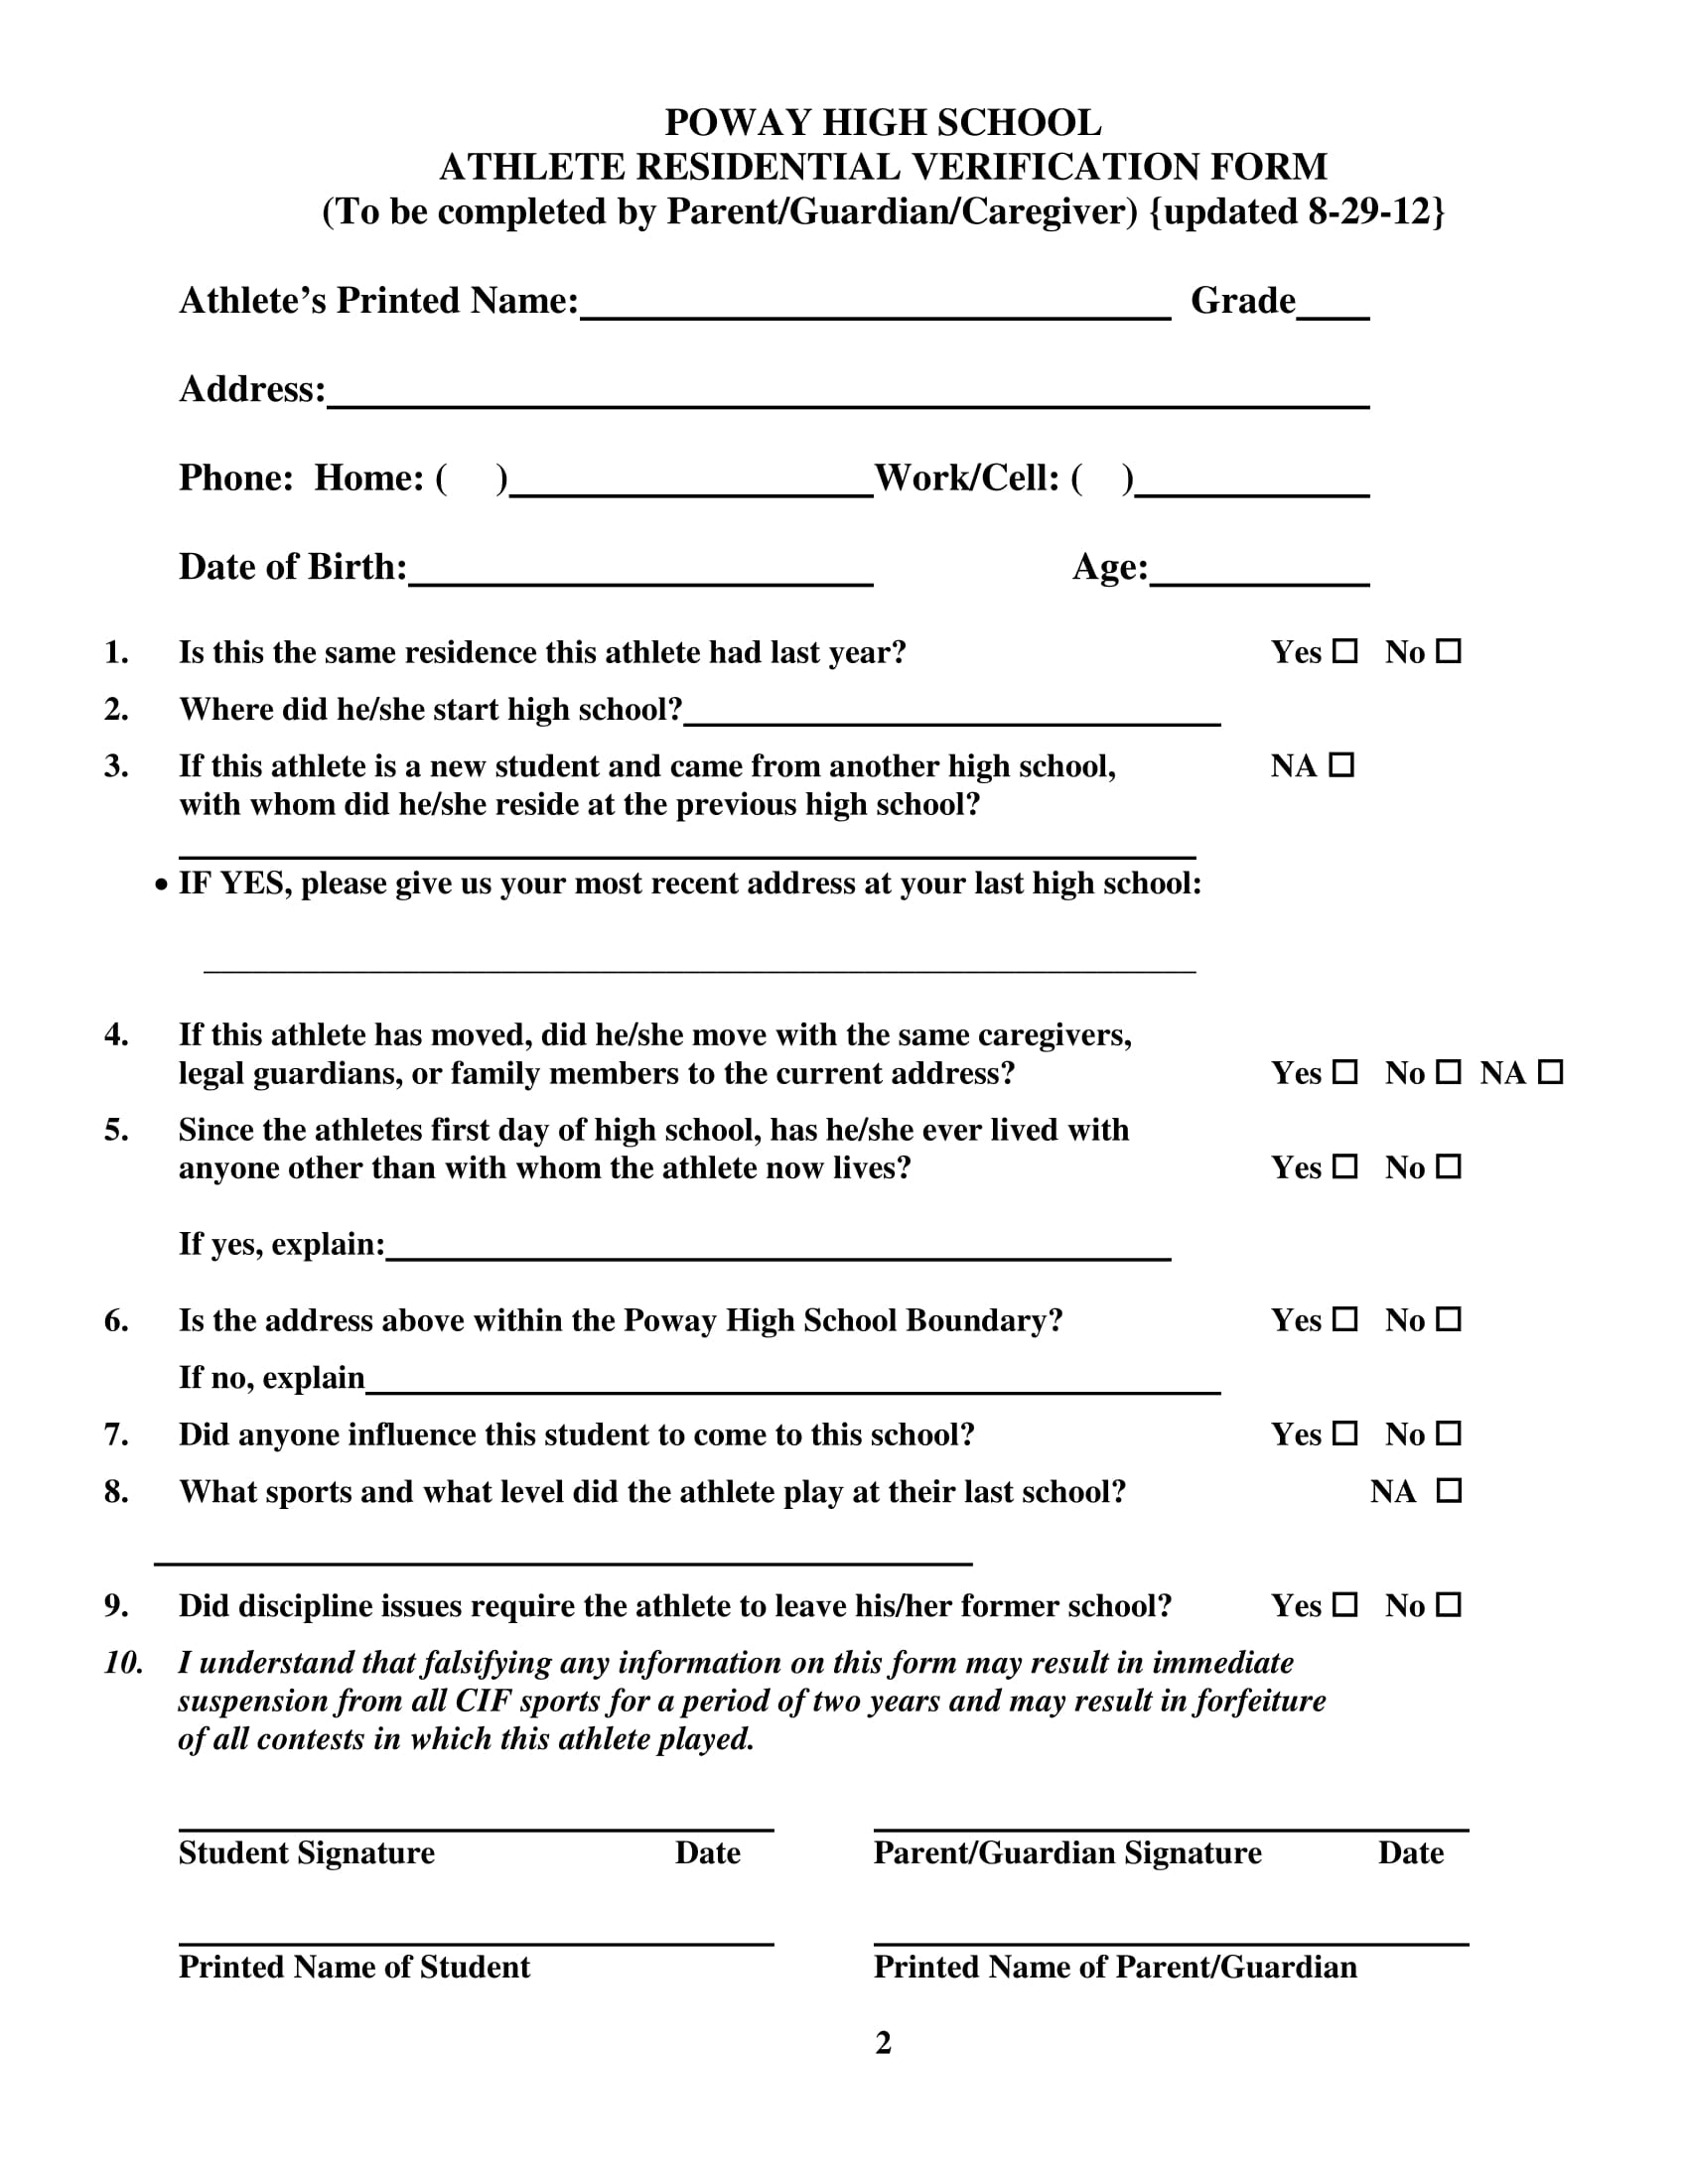 athlete residential verification form 1